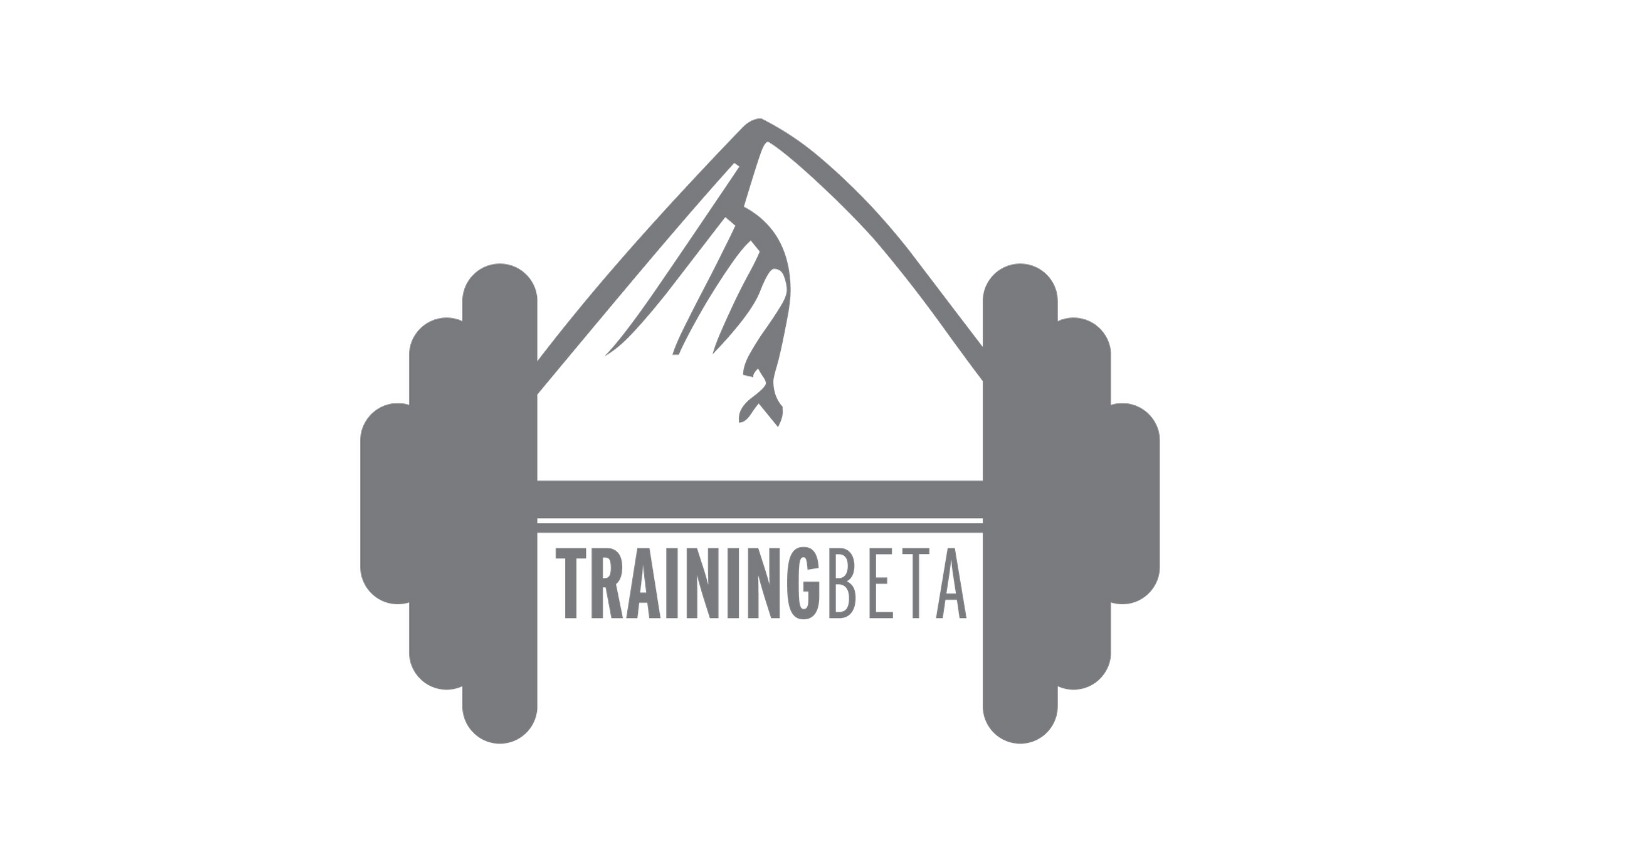 (c) Trainingbeta.com